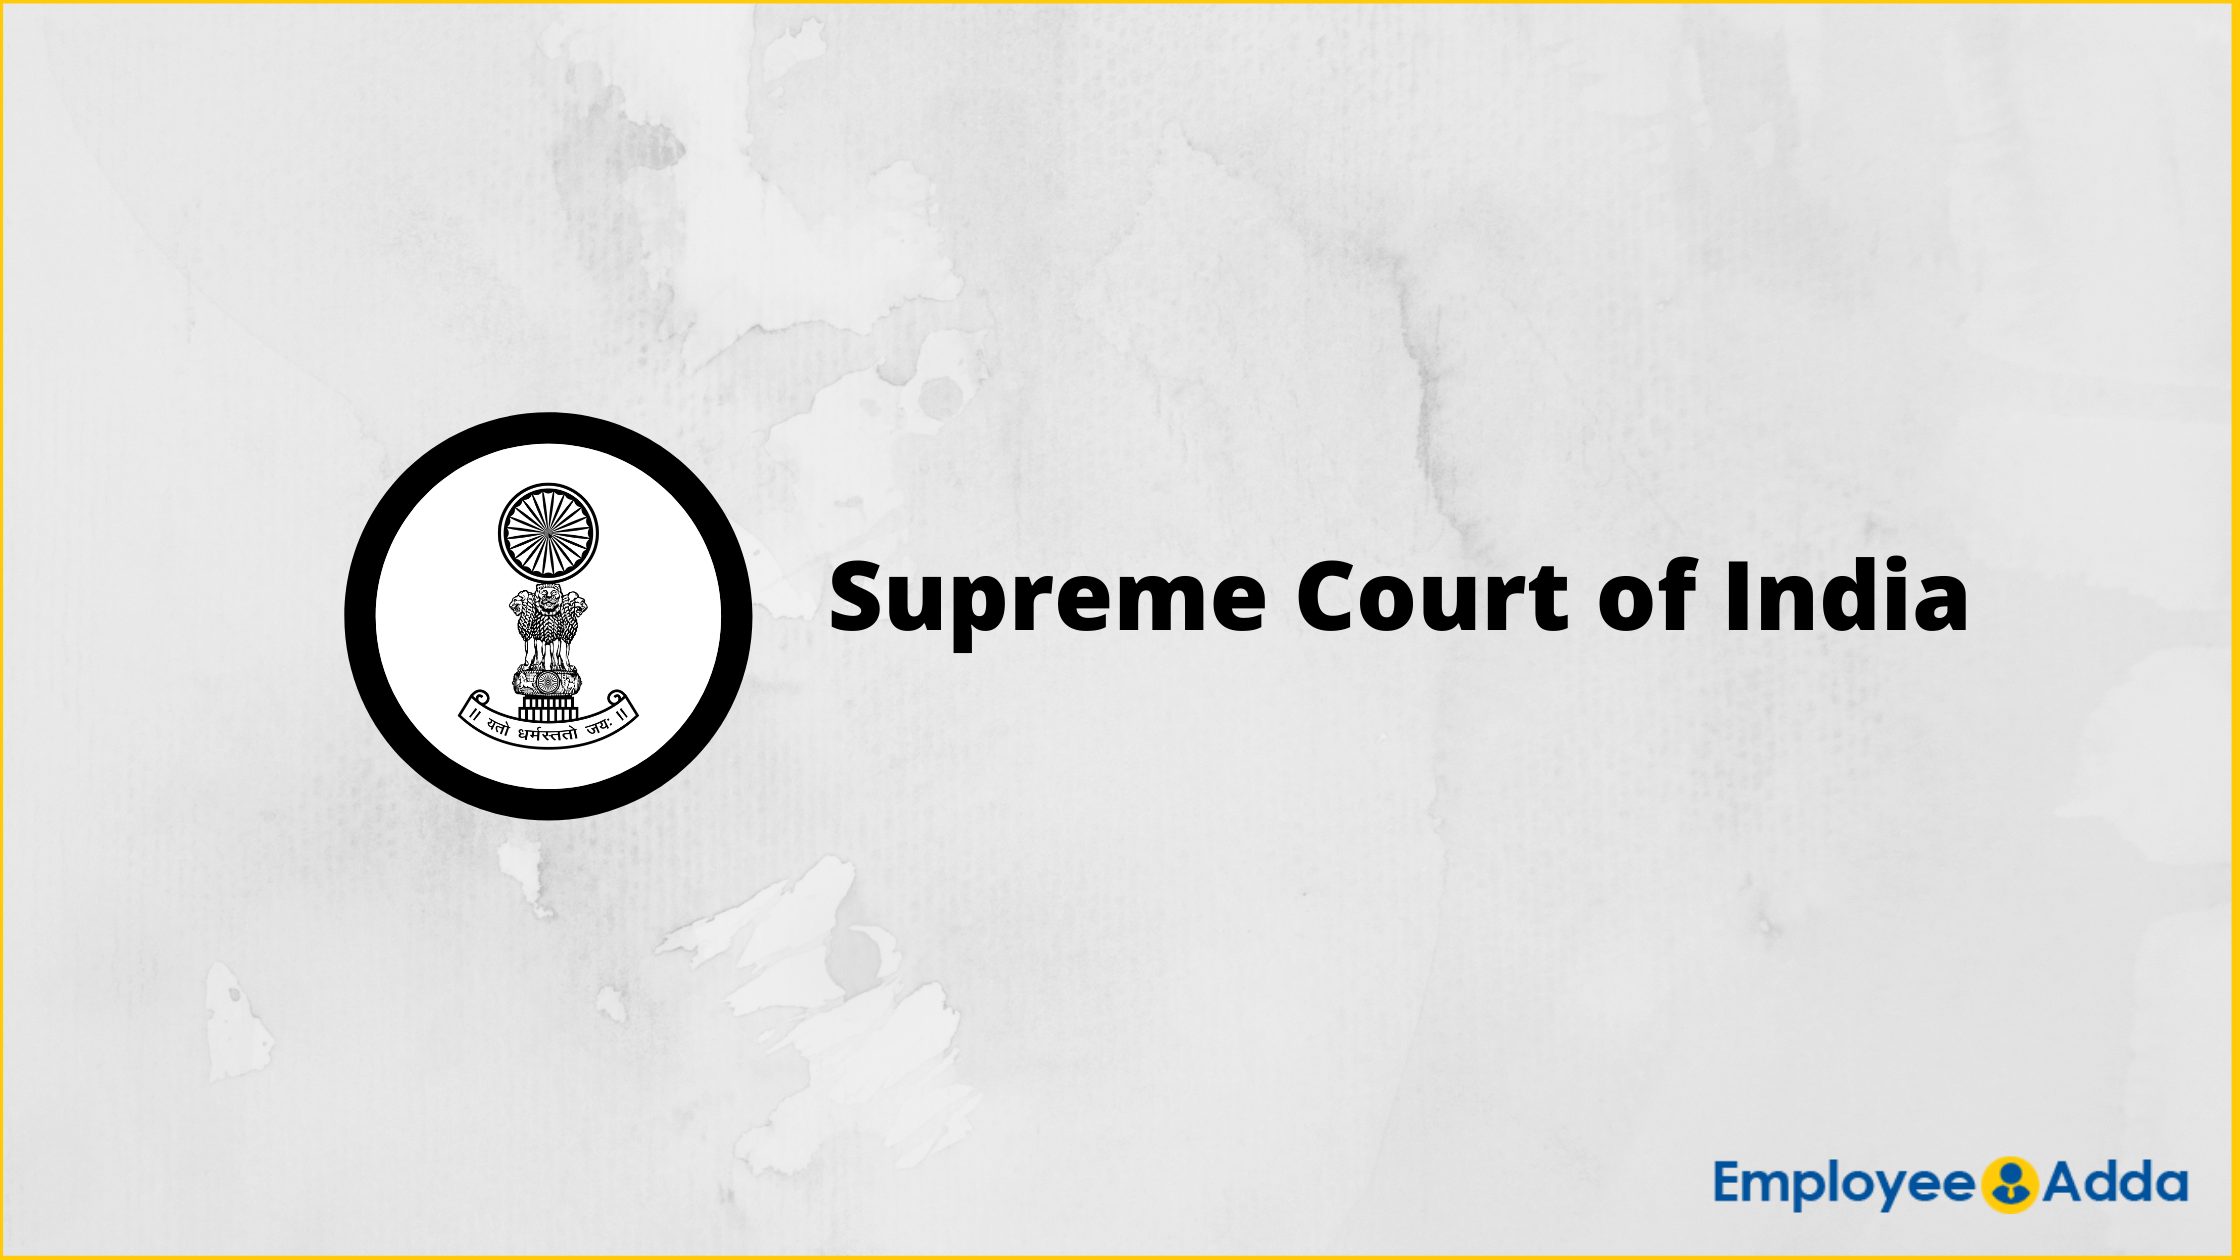 upreme Court of India Recruitment